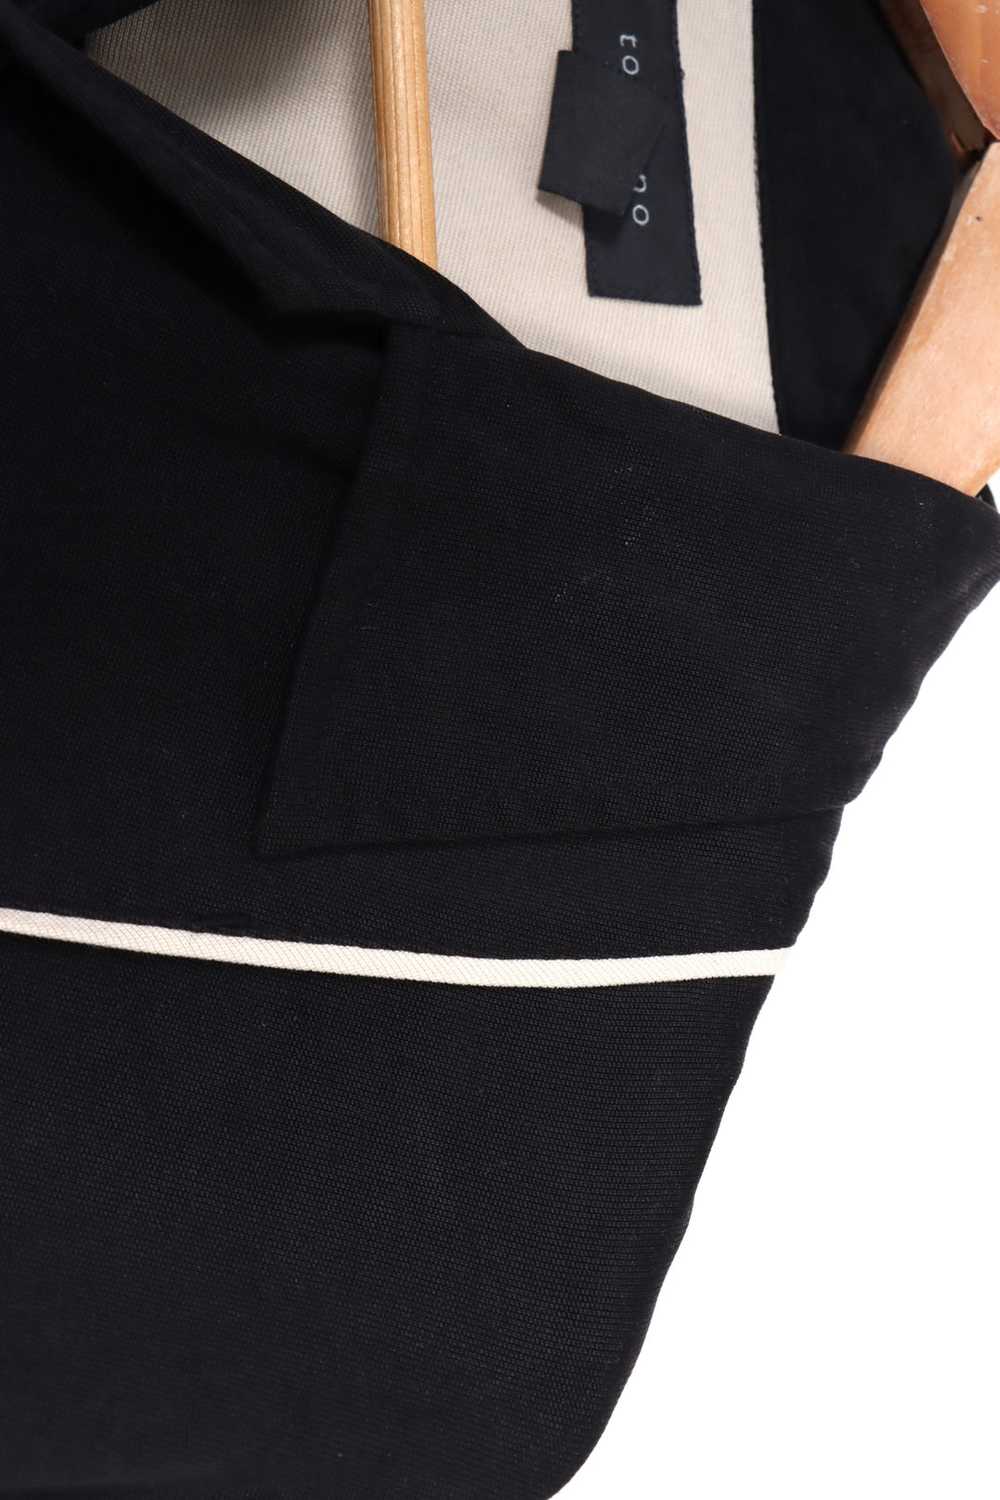 Silk Striped Black & Beige Button Up Bowling Shir… - image 4